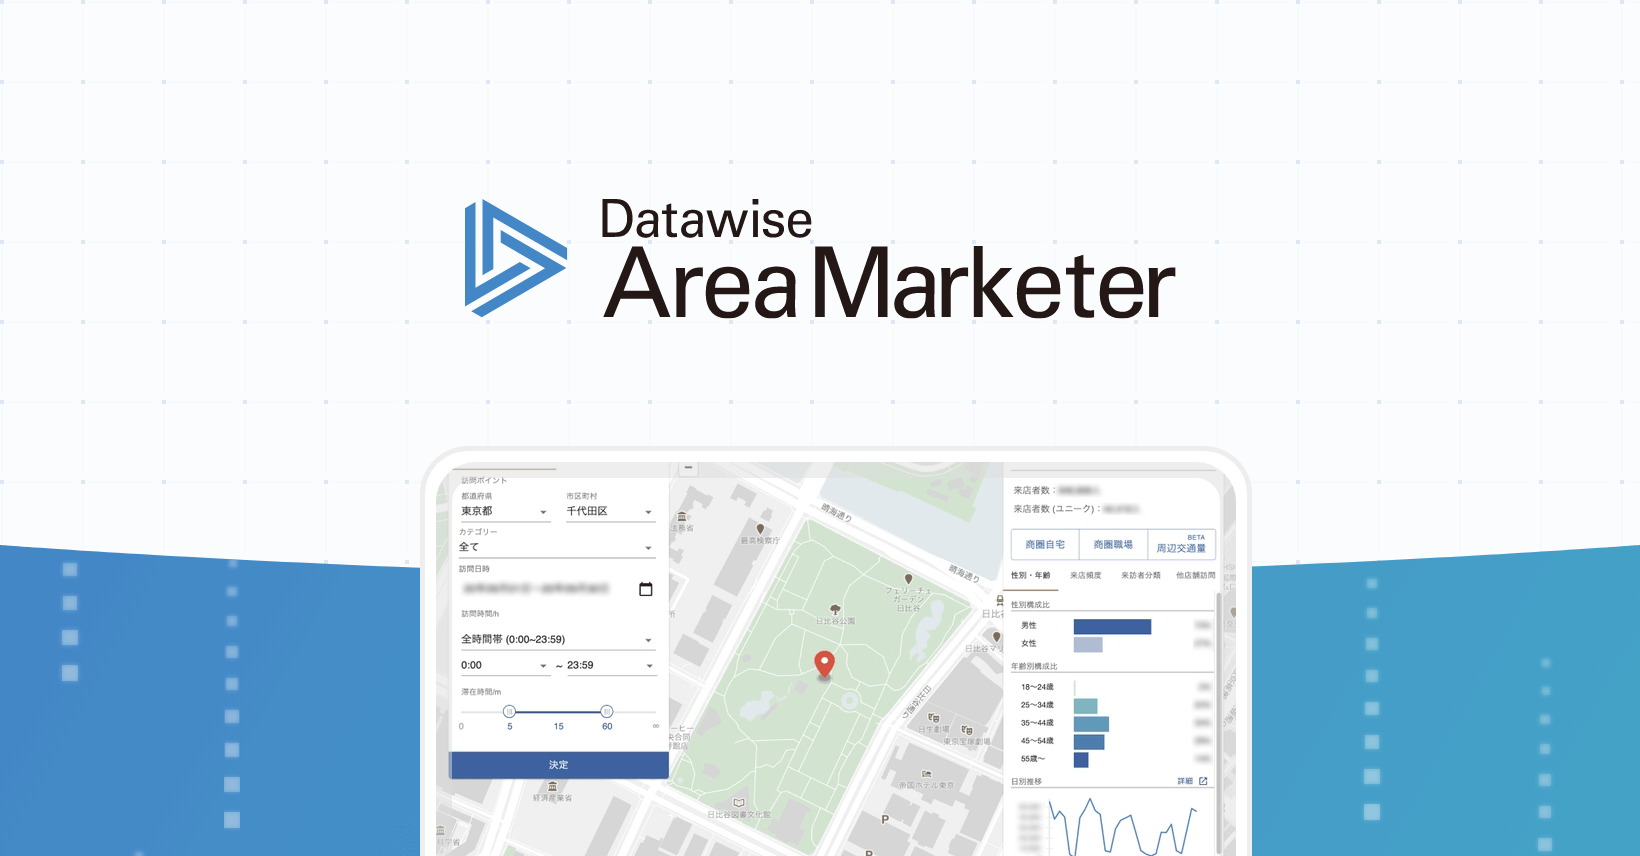 Datawise Area Marketer